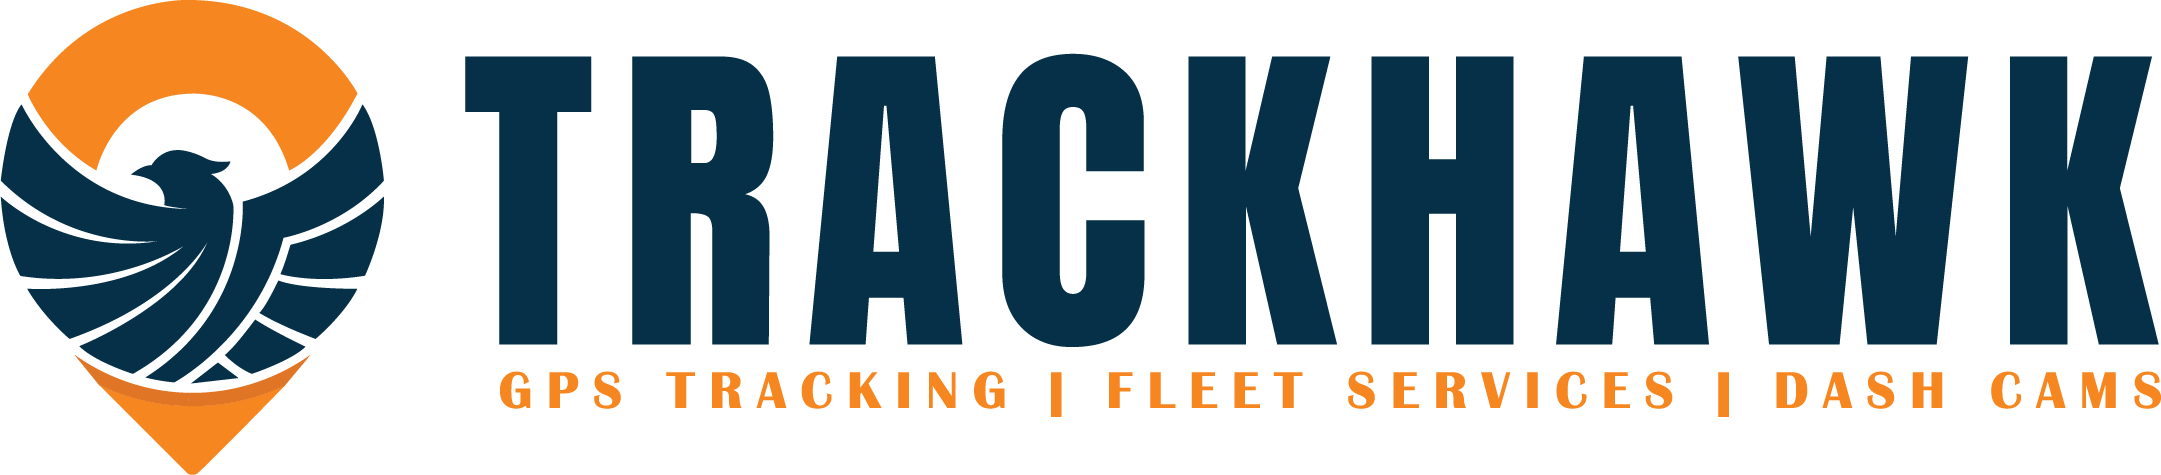 Trackhawkgps_logo